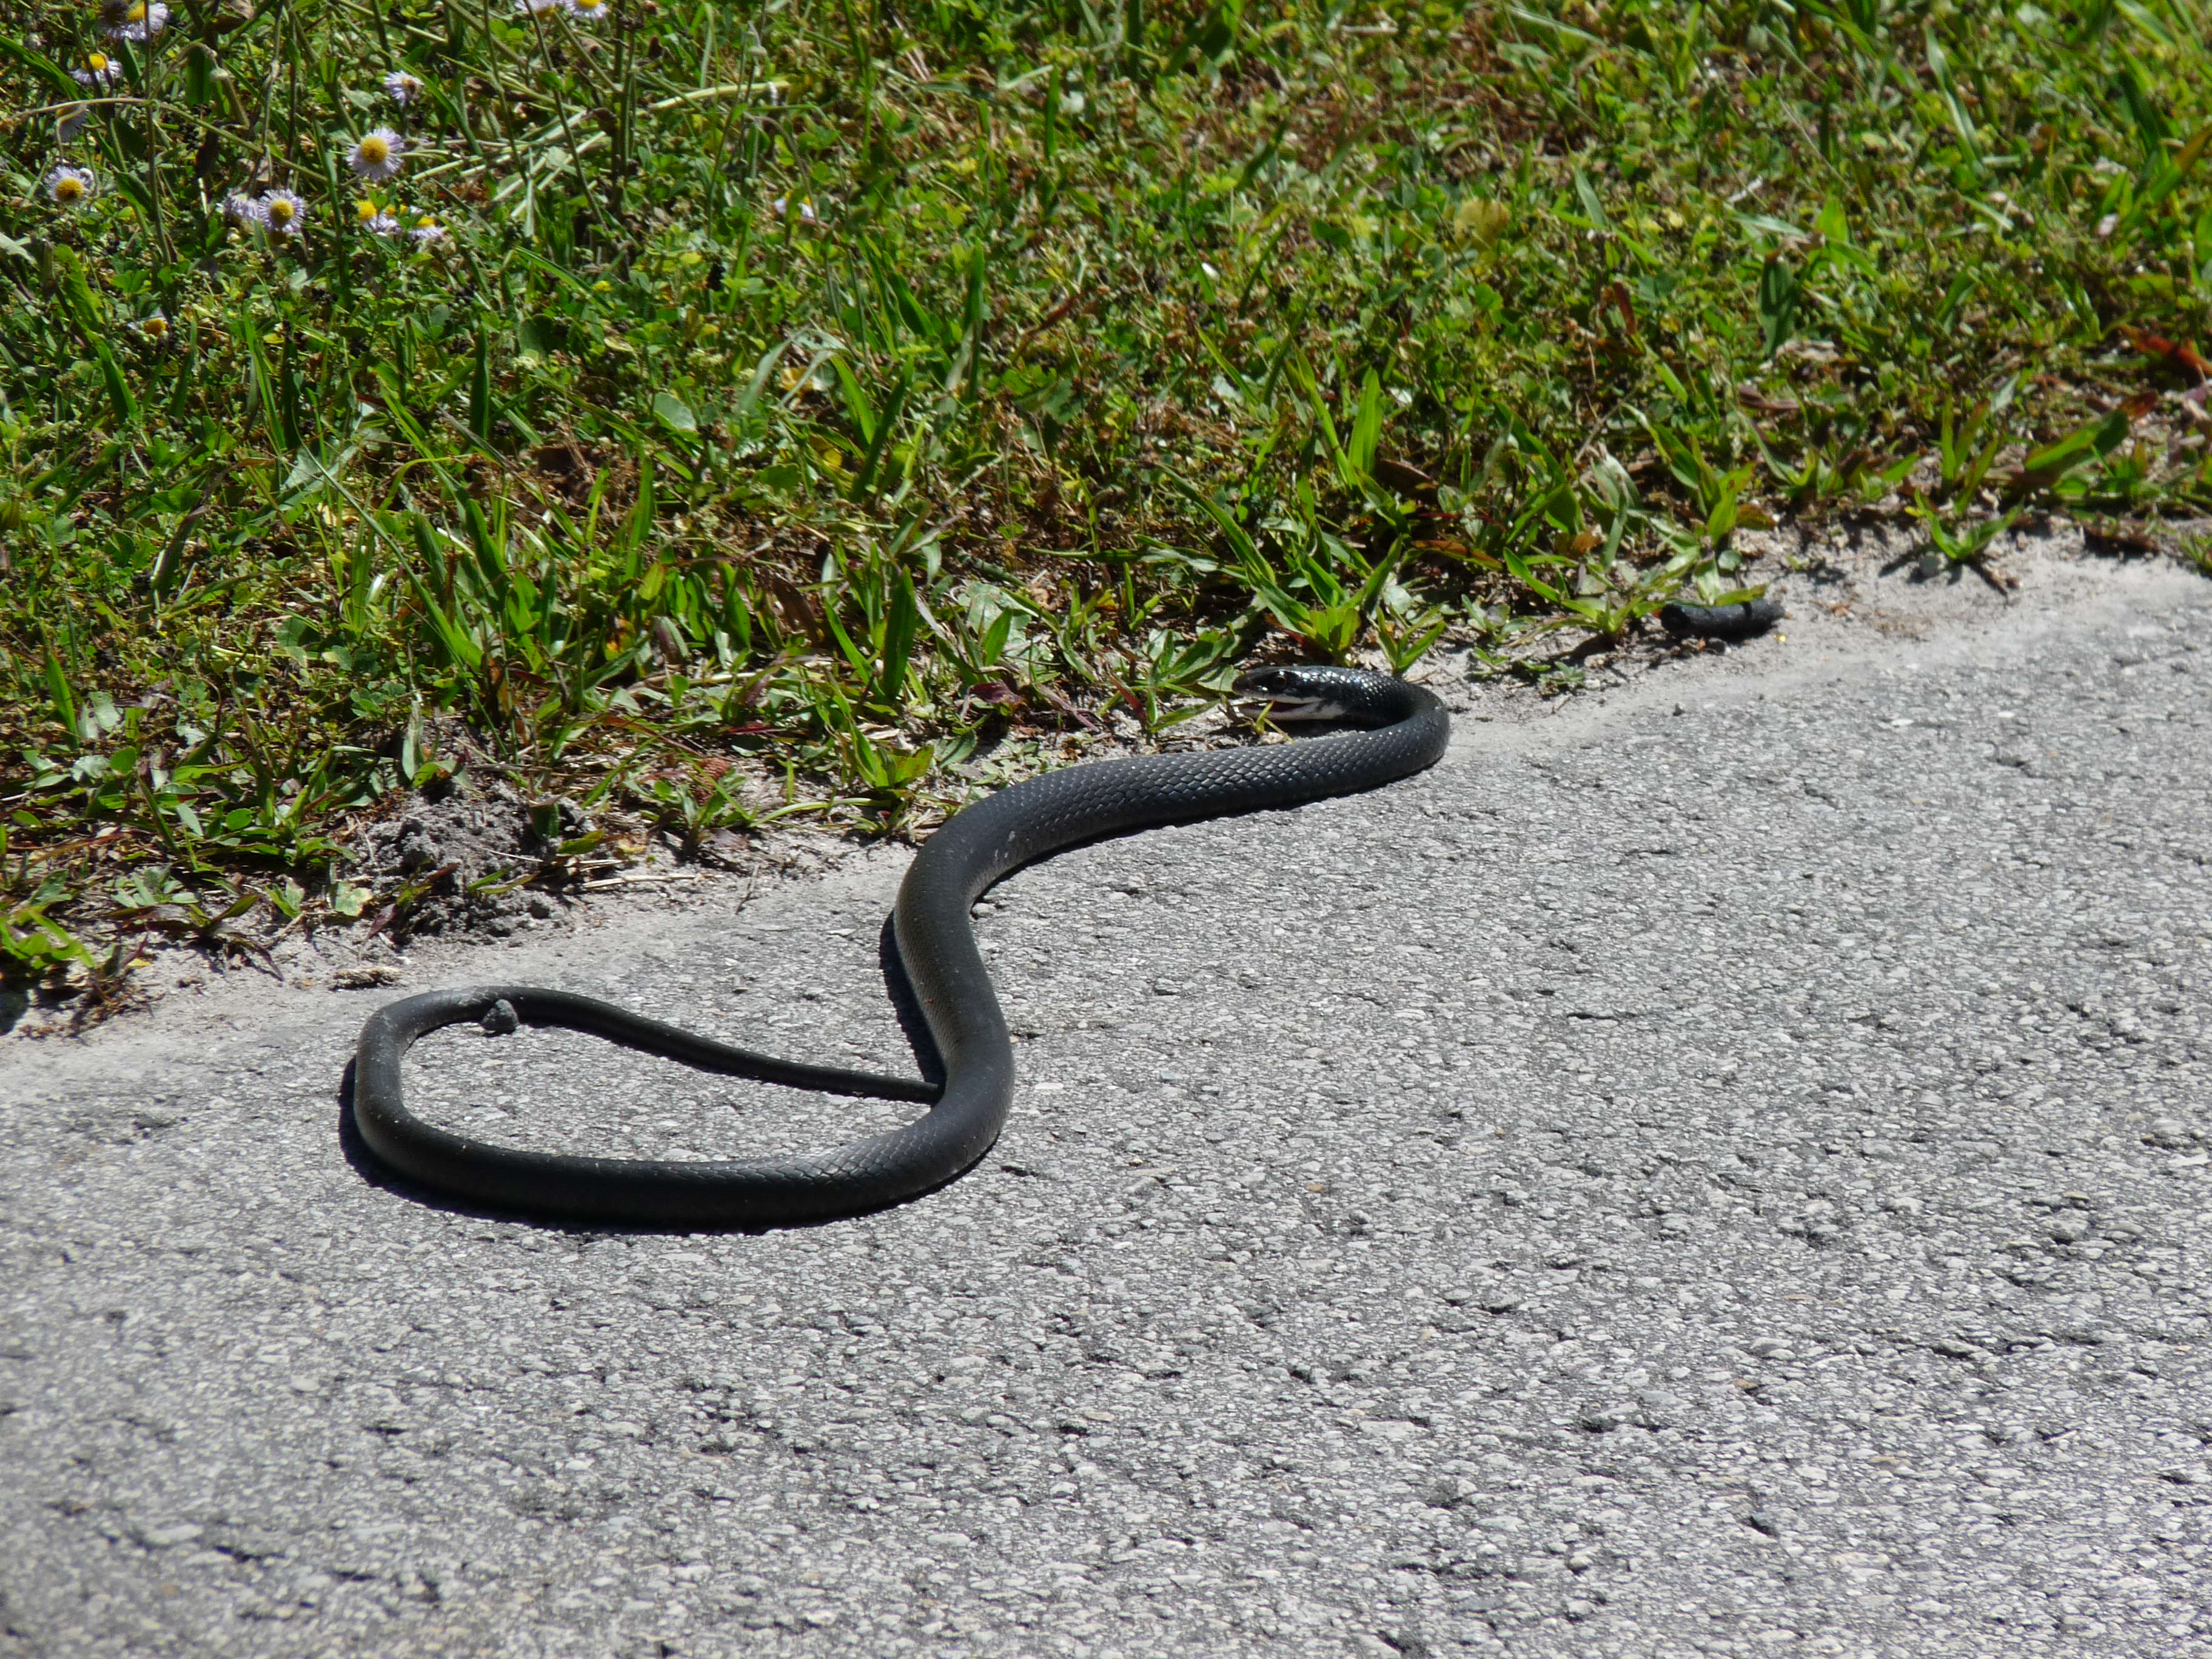 fernandina island racer snakes